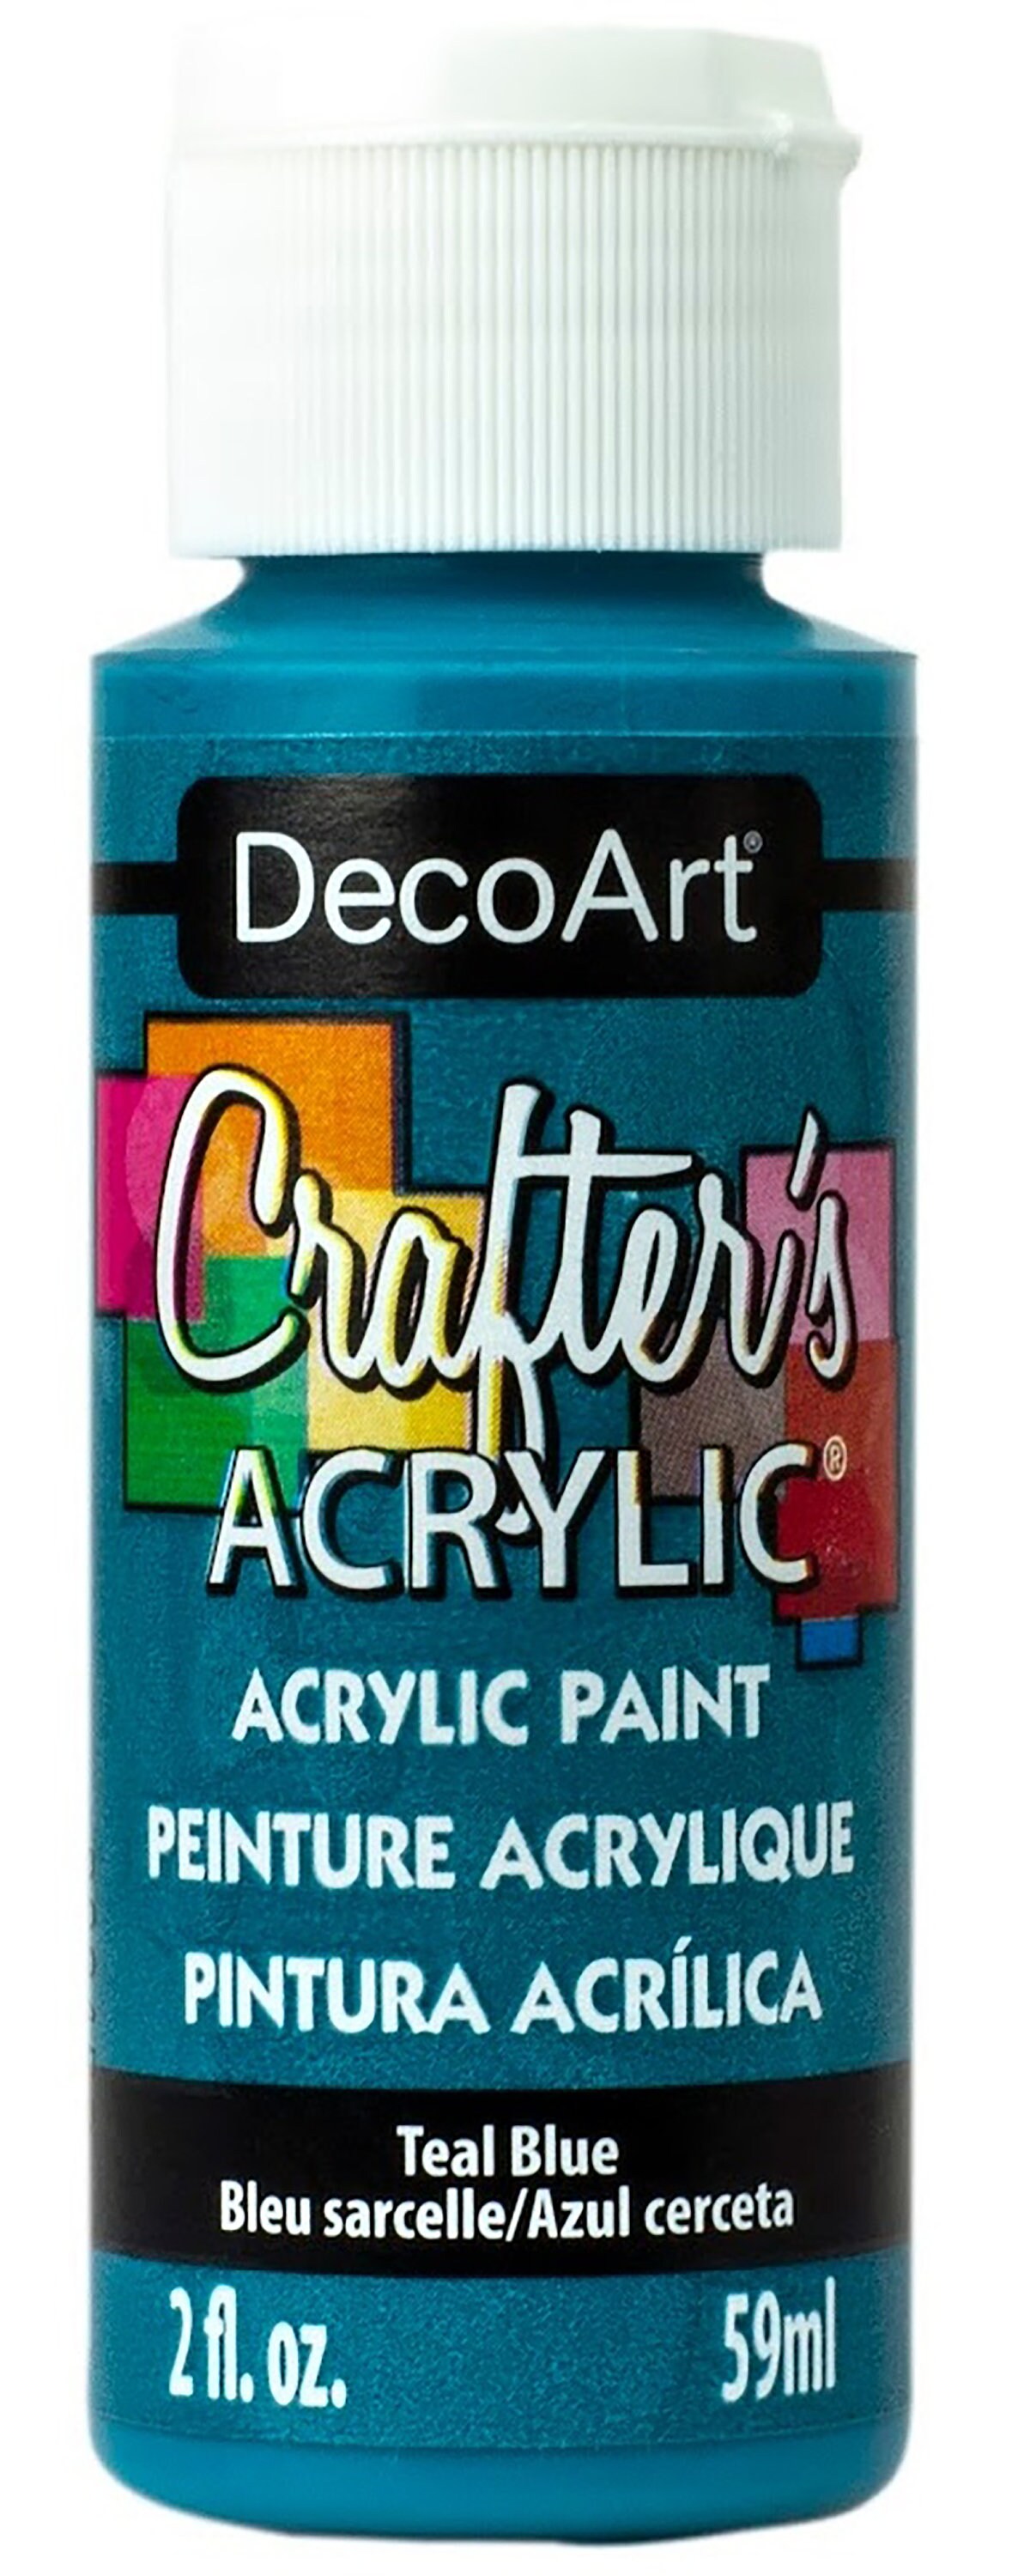 Decoart Crafters Acrylic Paints Yellow Tones 59ml 2oz Bottles